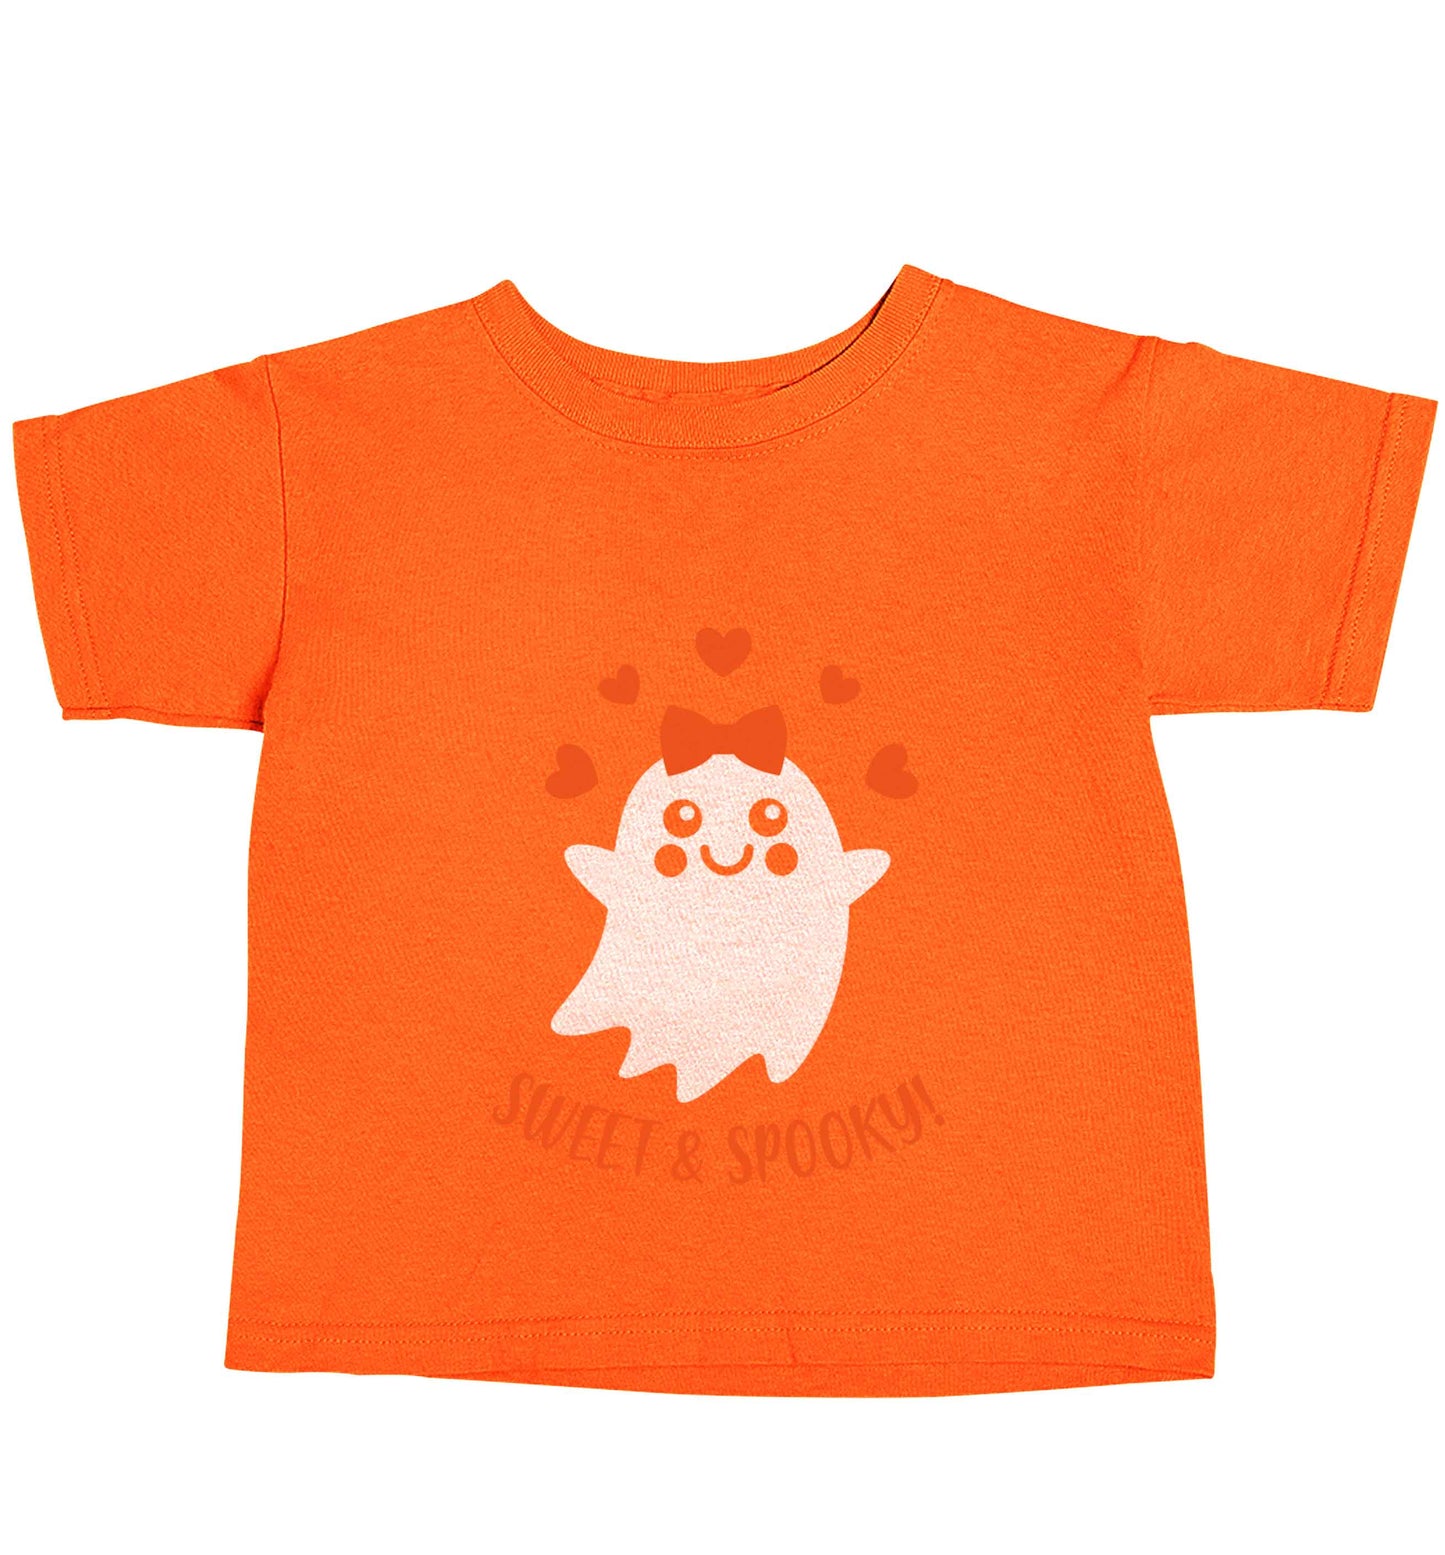 Sweet and spooky orange baby toddler Tshirt 2 Years